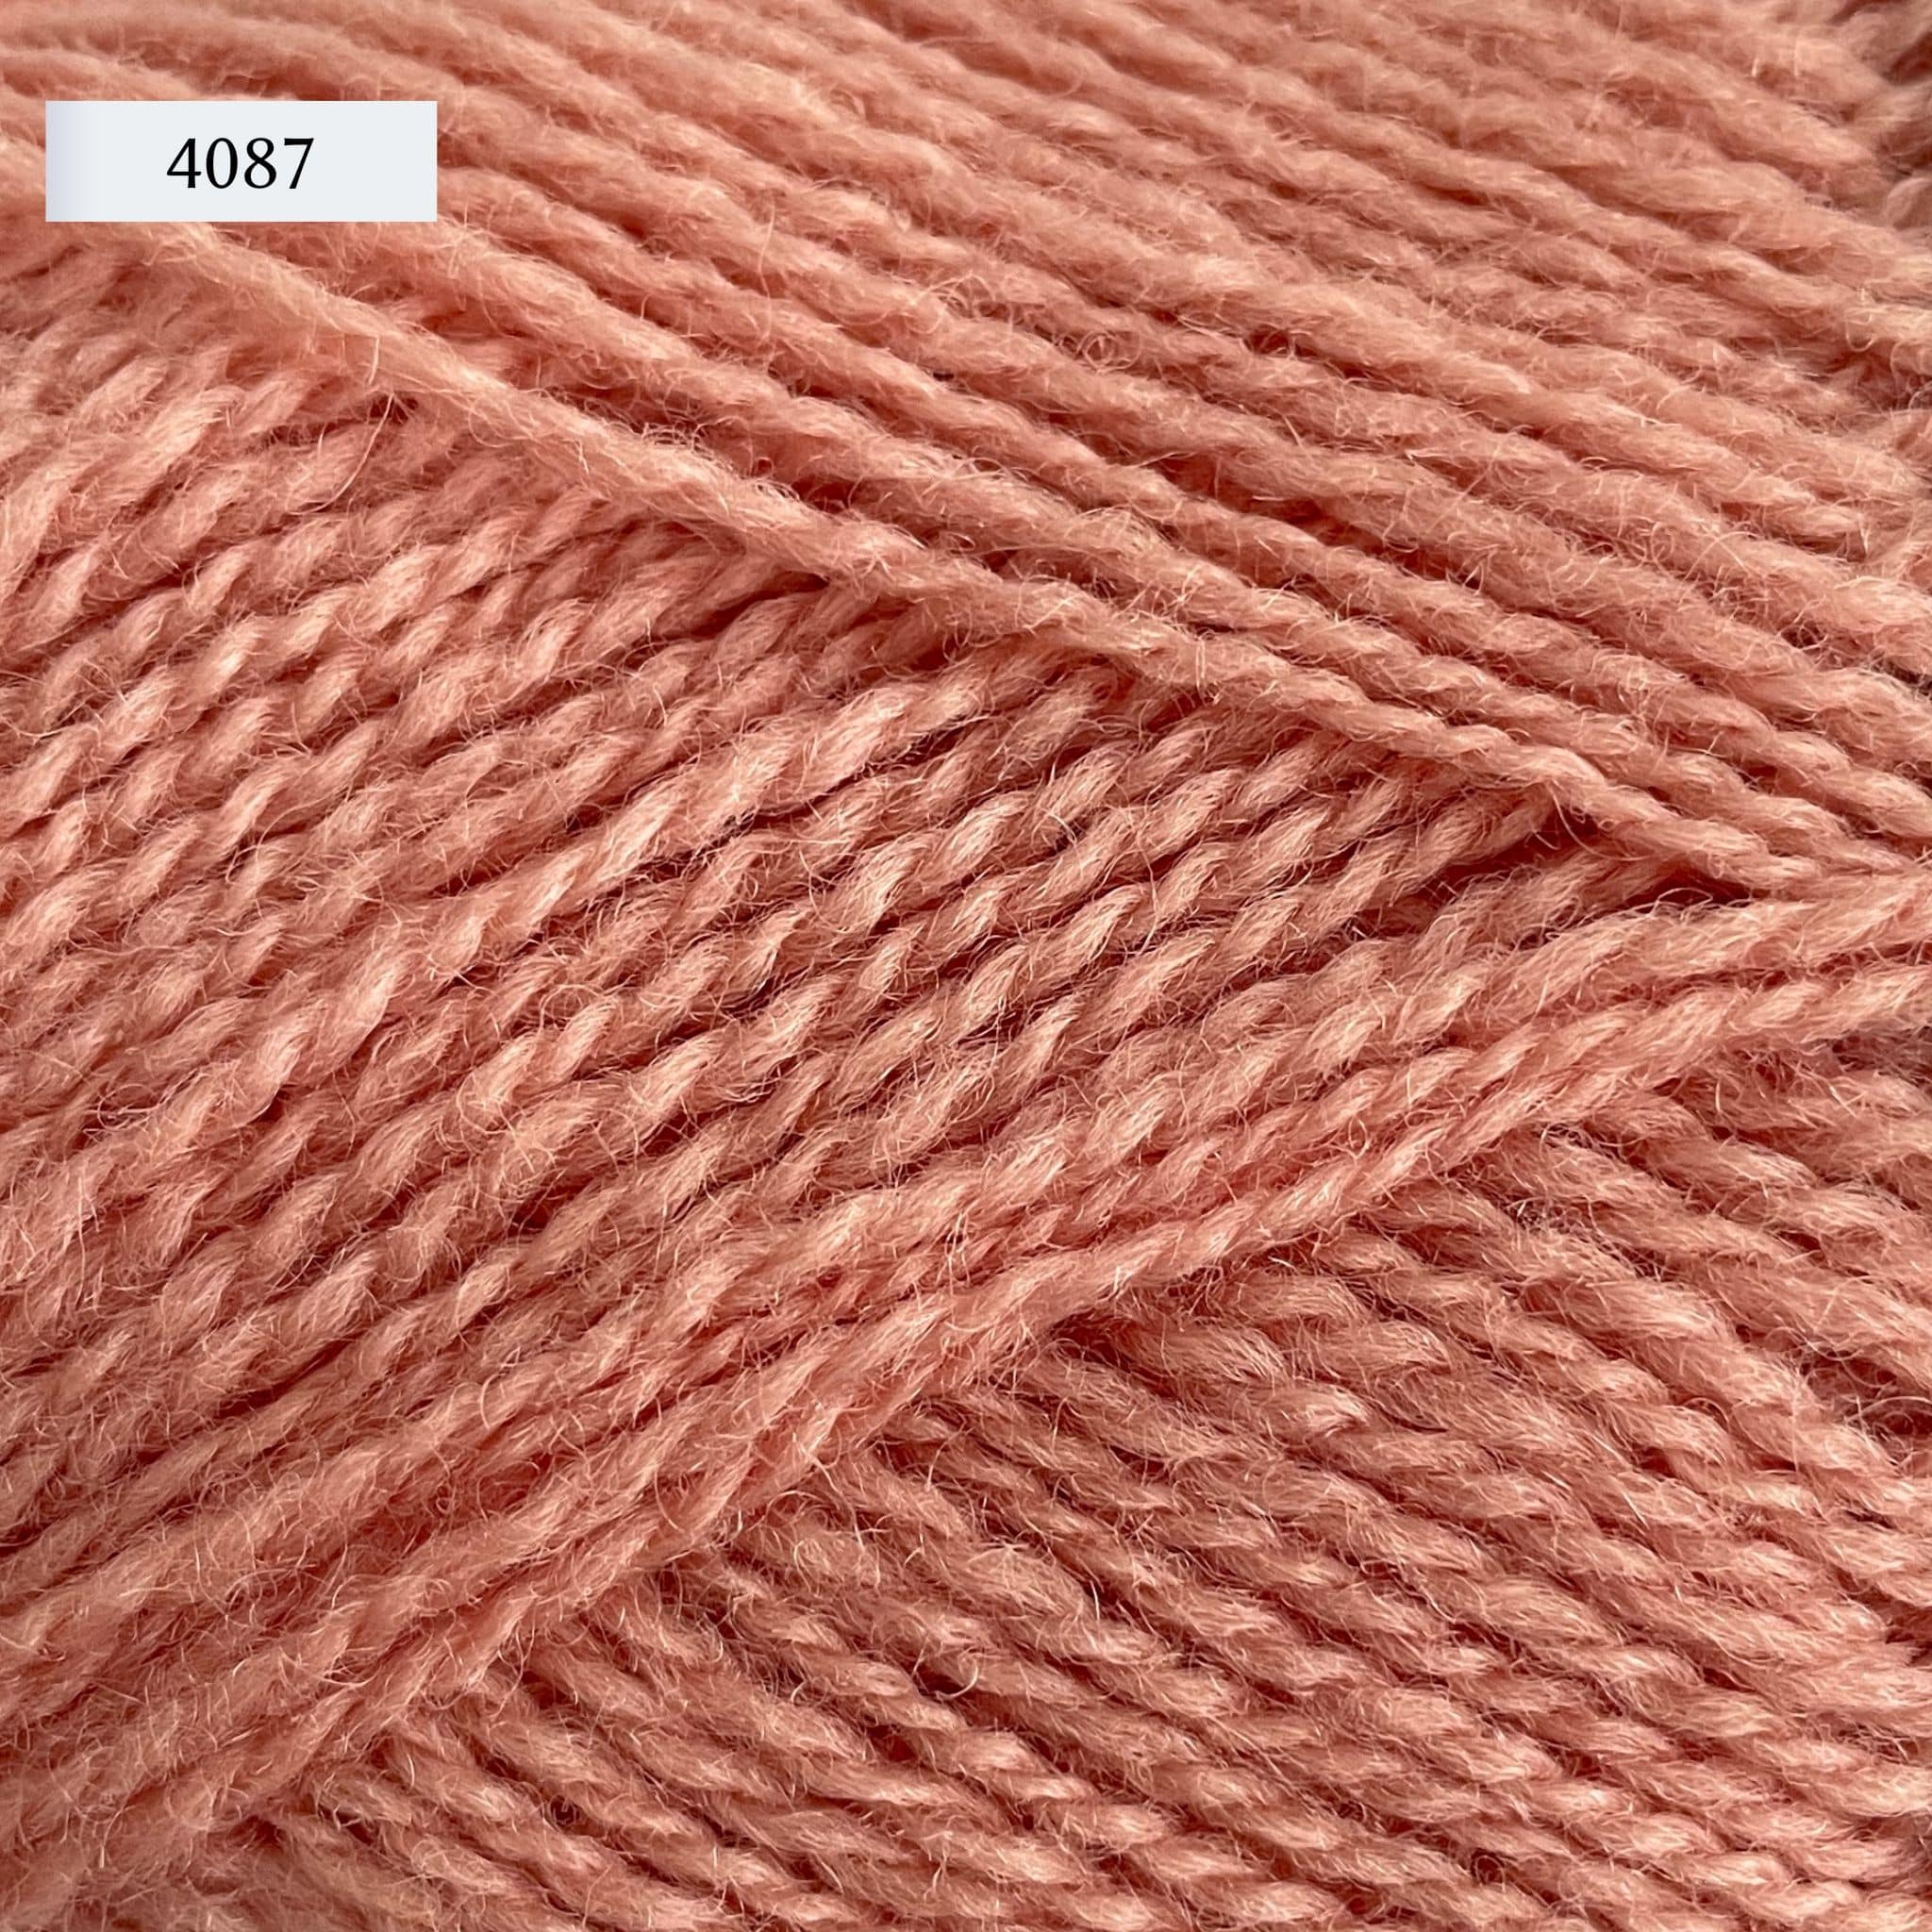 Rauma Finullgarn, a fingering/sport weight yarn, in color 4087, a light pink